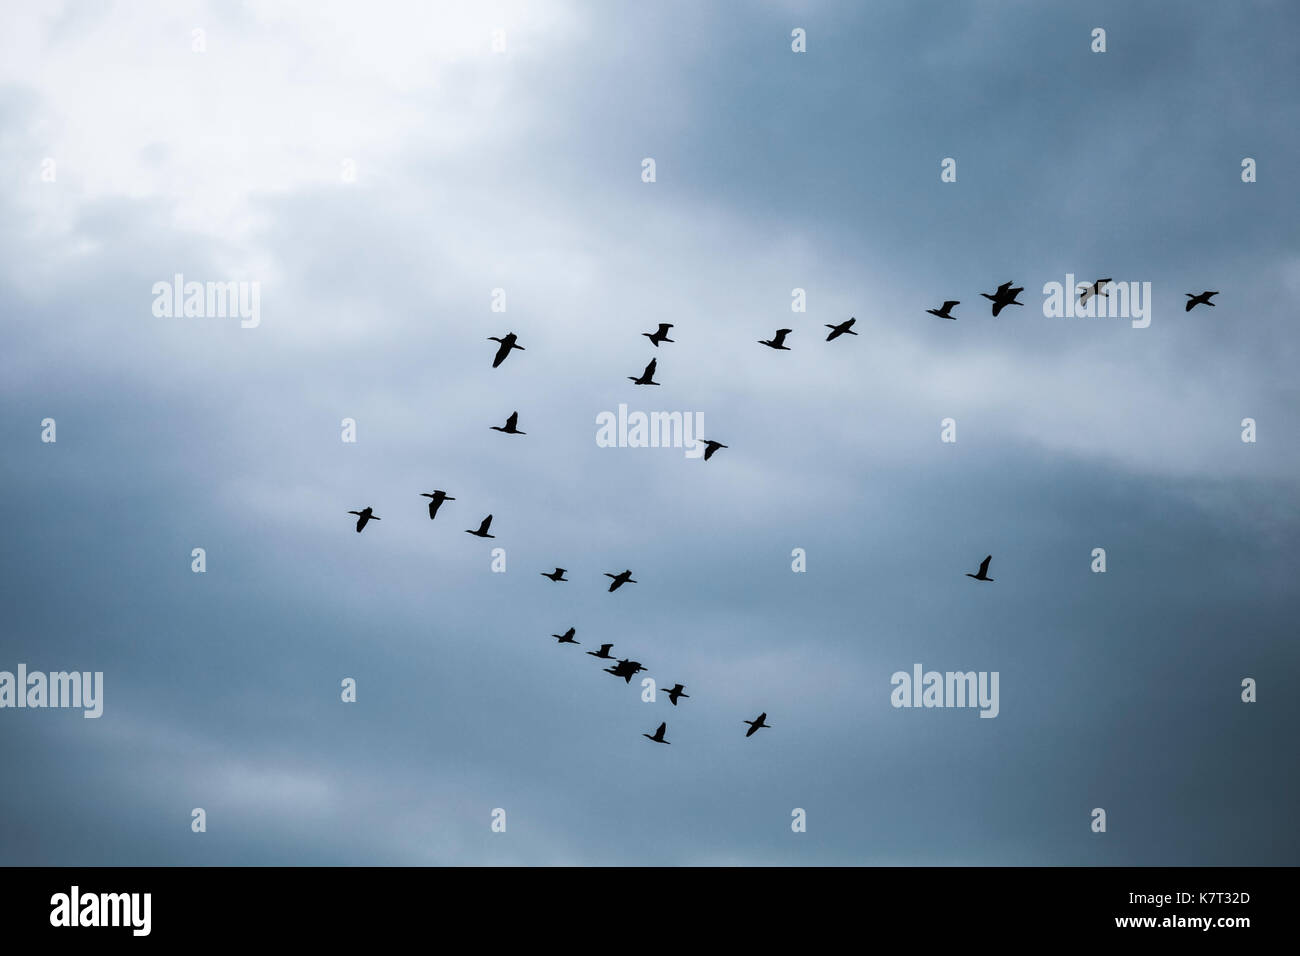 Herde von großen schwarzen Kormorane fliegen in bewölkten Himmel Stockfoto